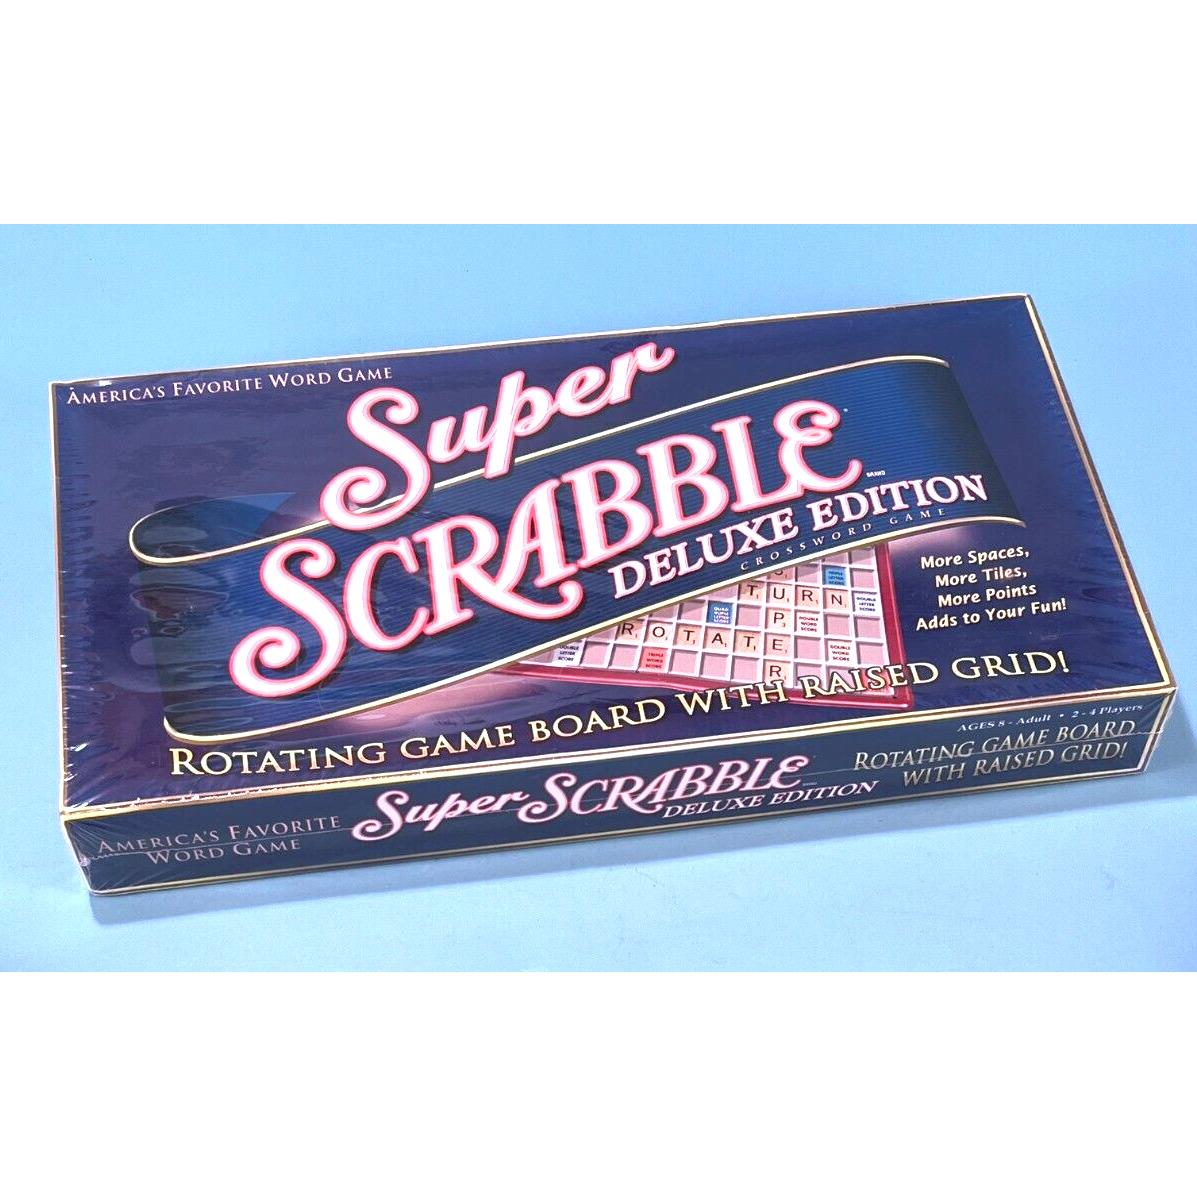 Super Scrabble Deluxe Edition - Rotating Board w/ Raised Grid